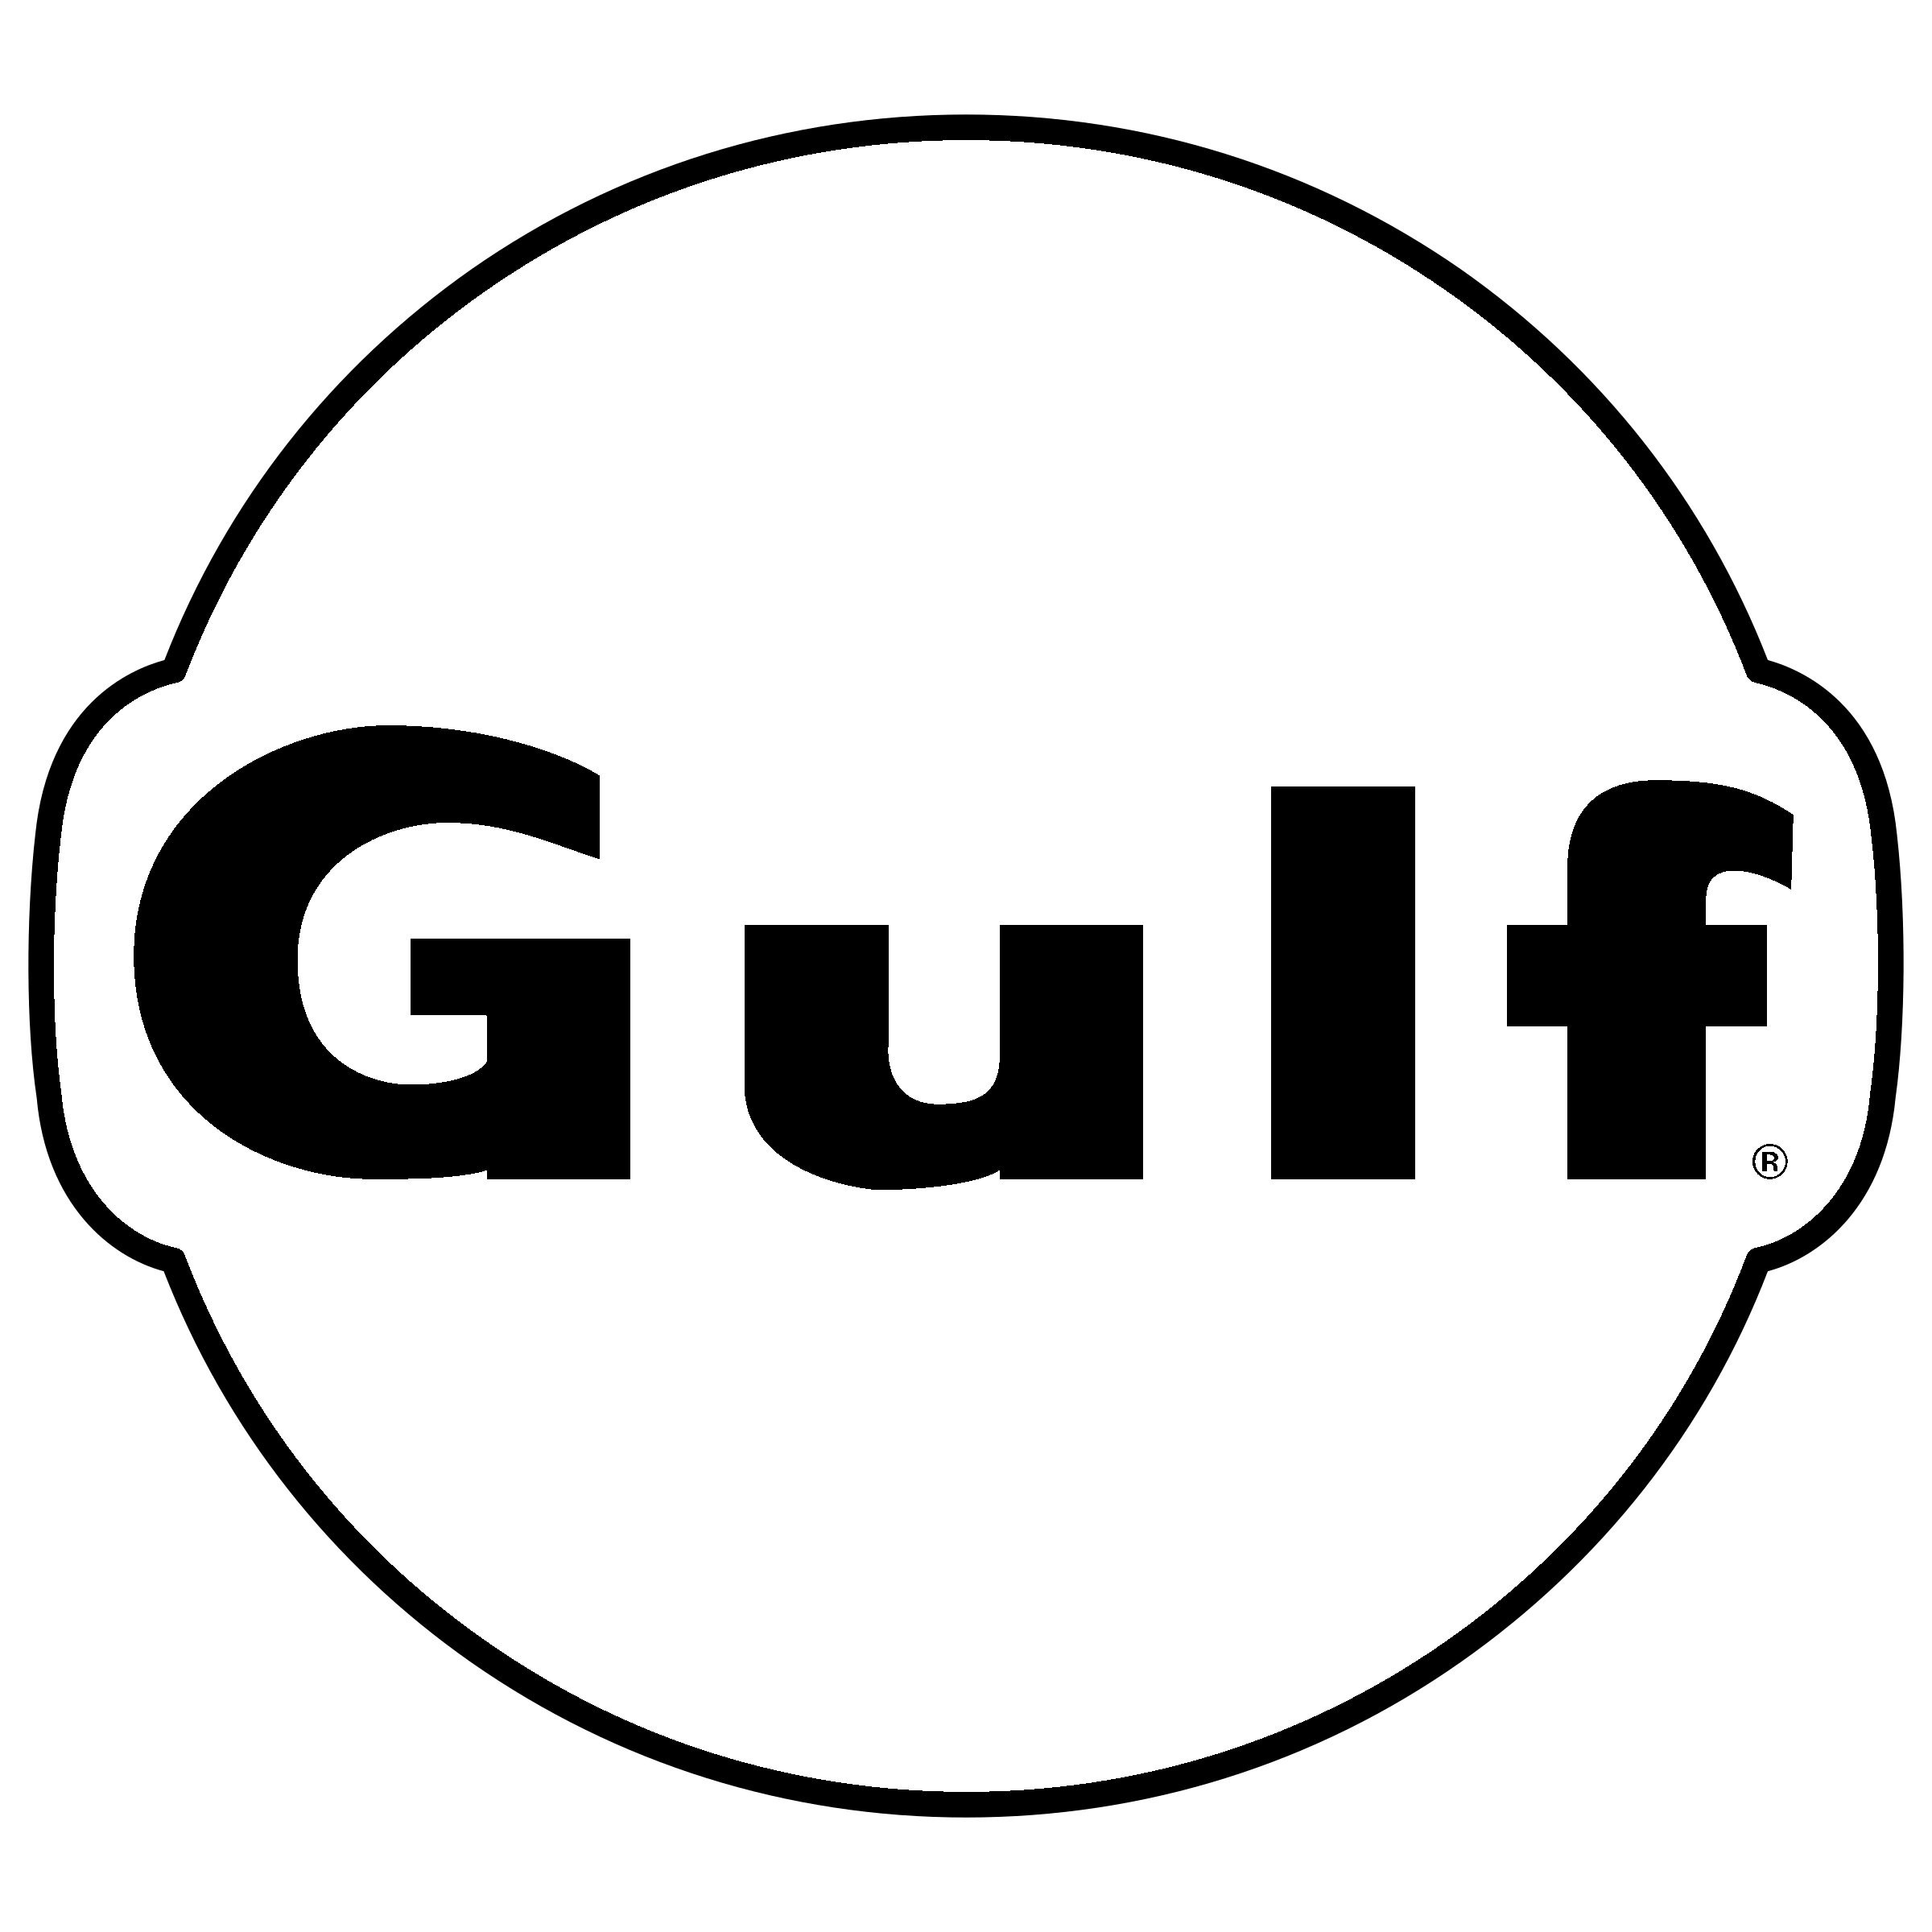 Gulf Logo - Gulf Logo PNG Transparent & SVG Vector - Freebie Supply